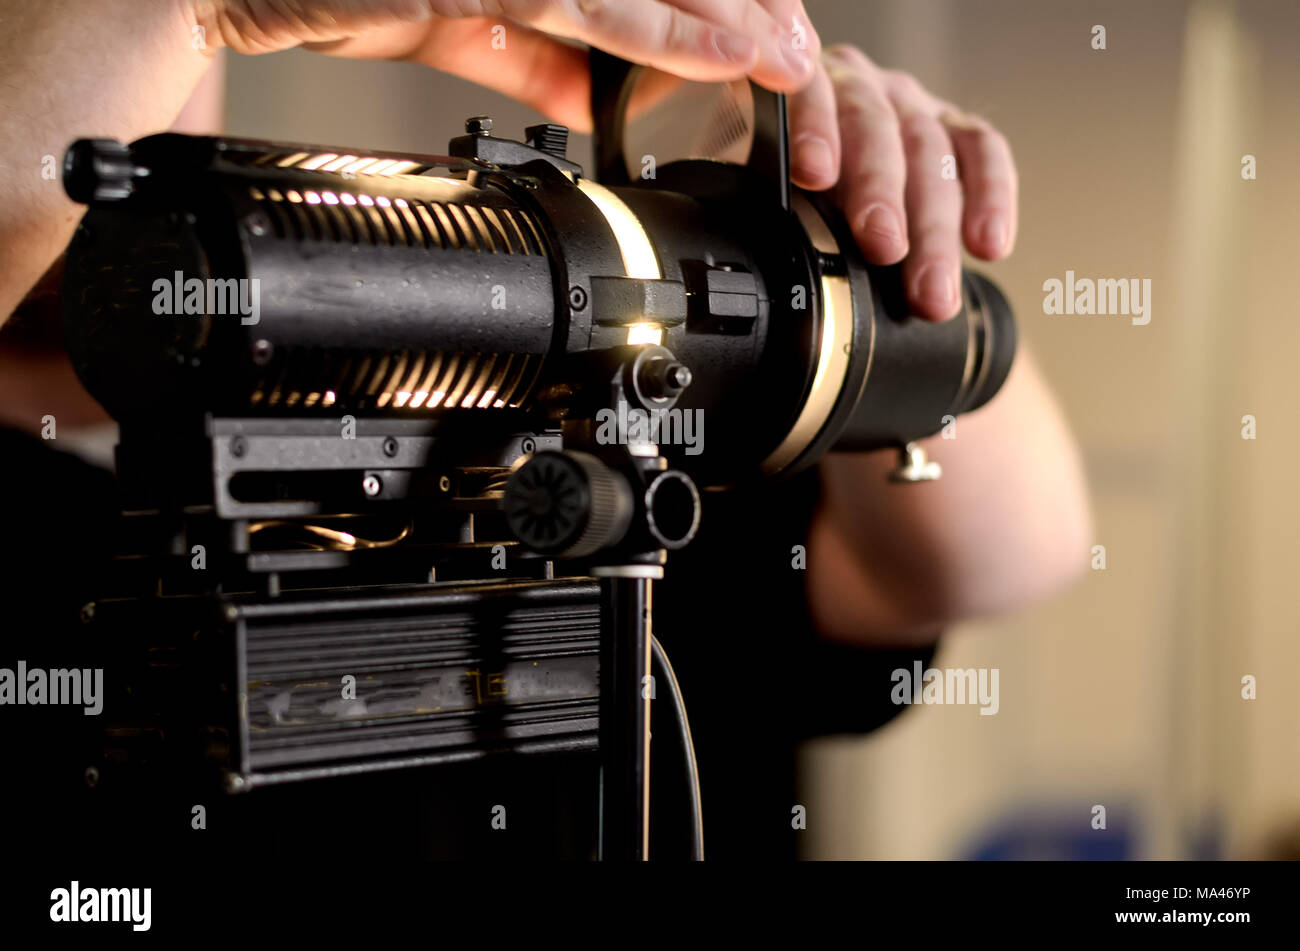 Man adjusts professional film spotlight bulb in studio. Precision lighting instruments in action. Stock Photo